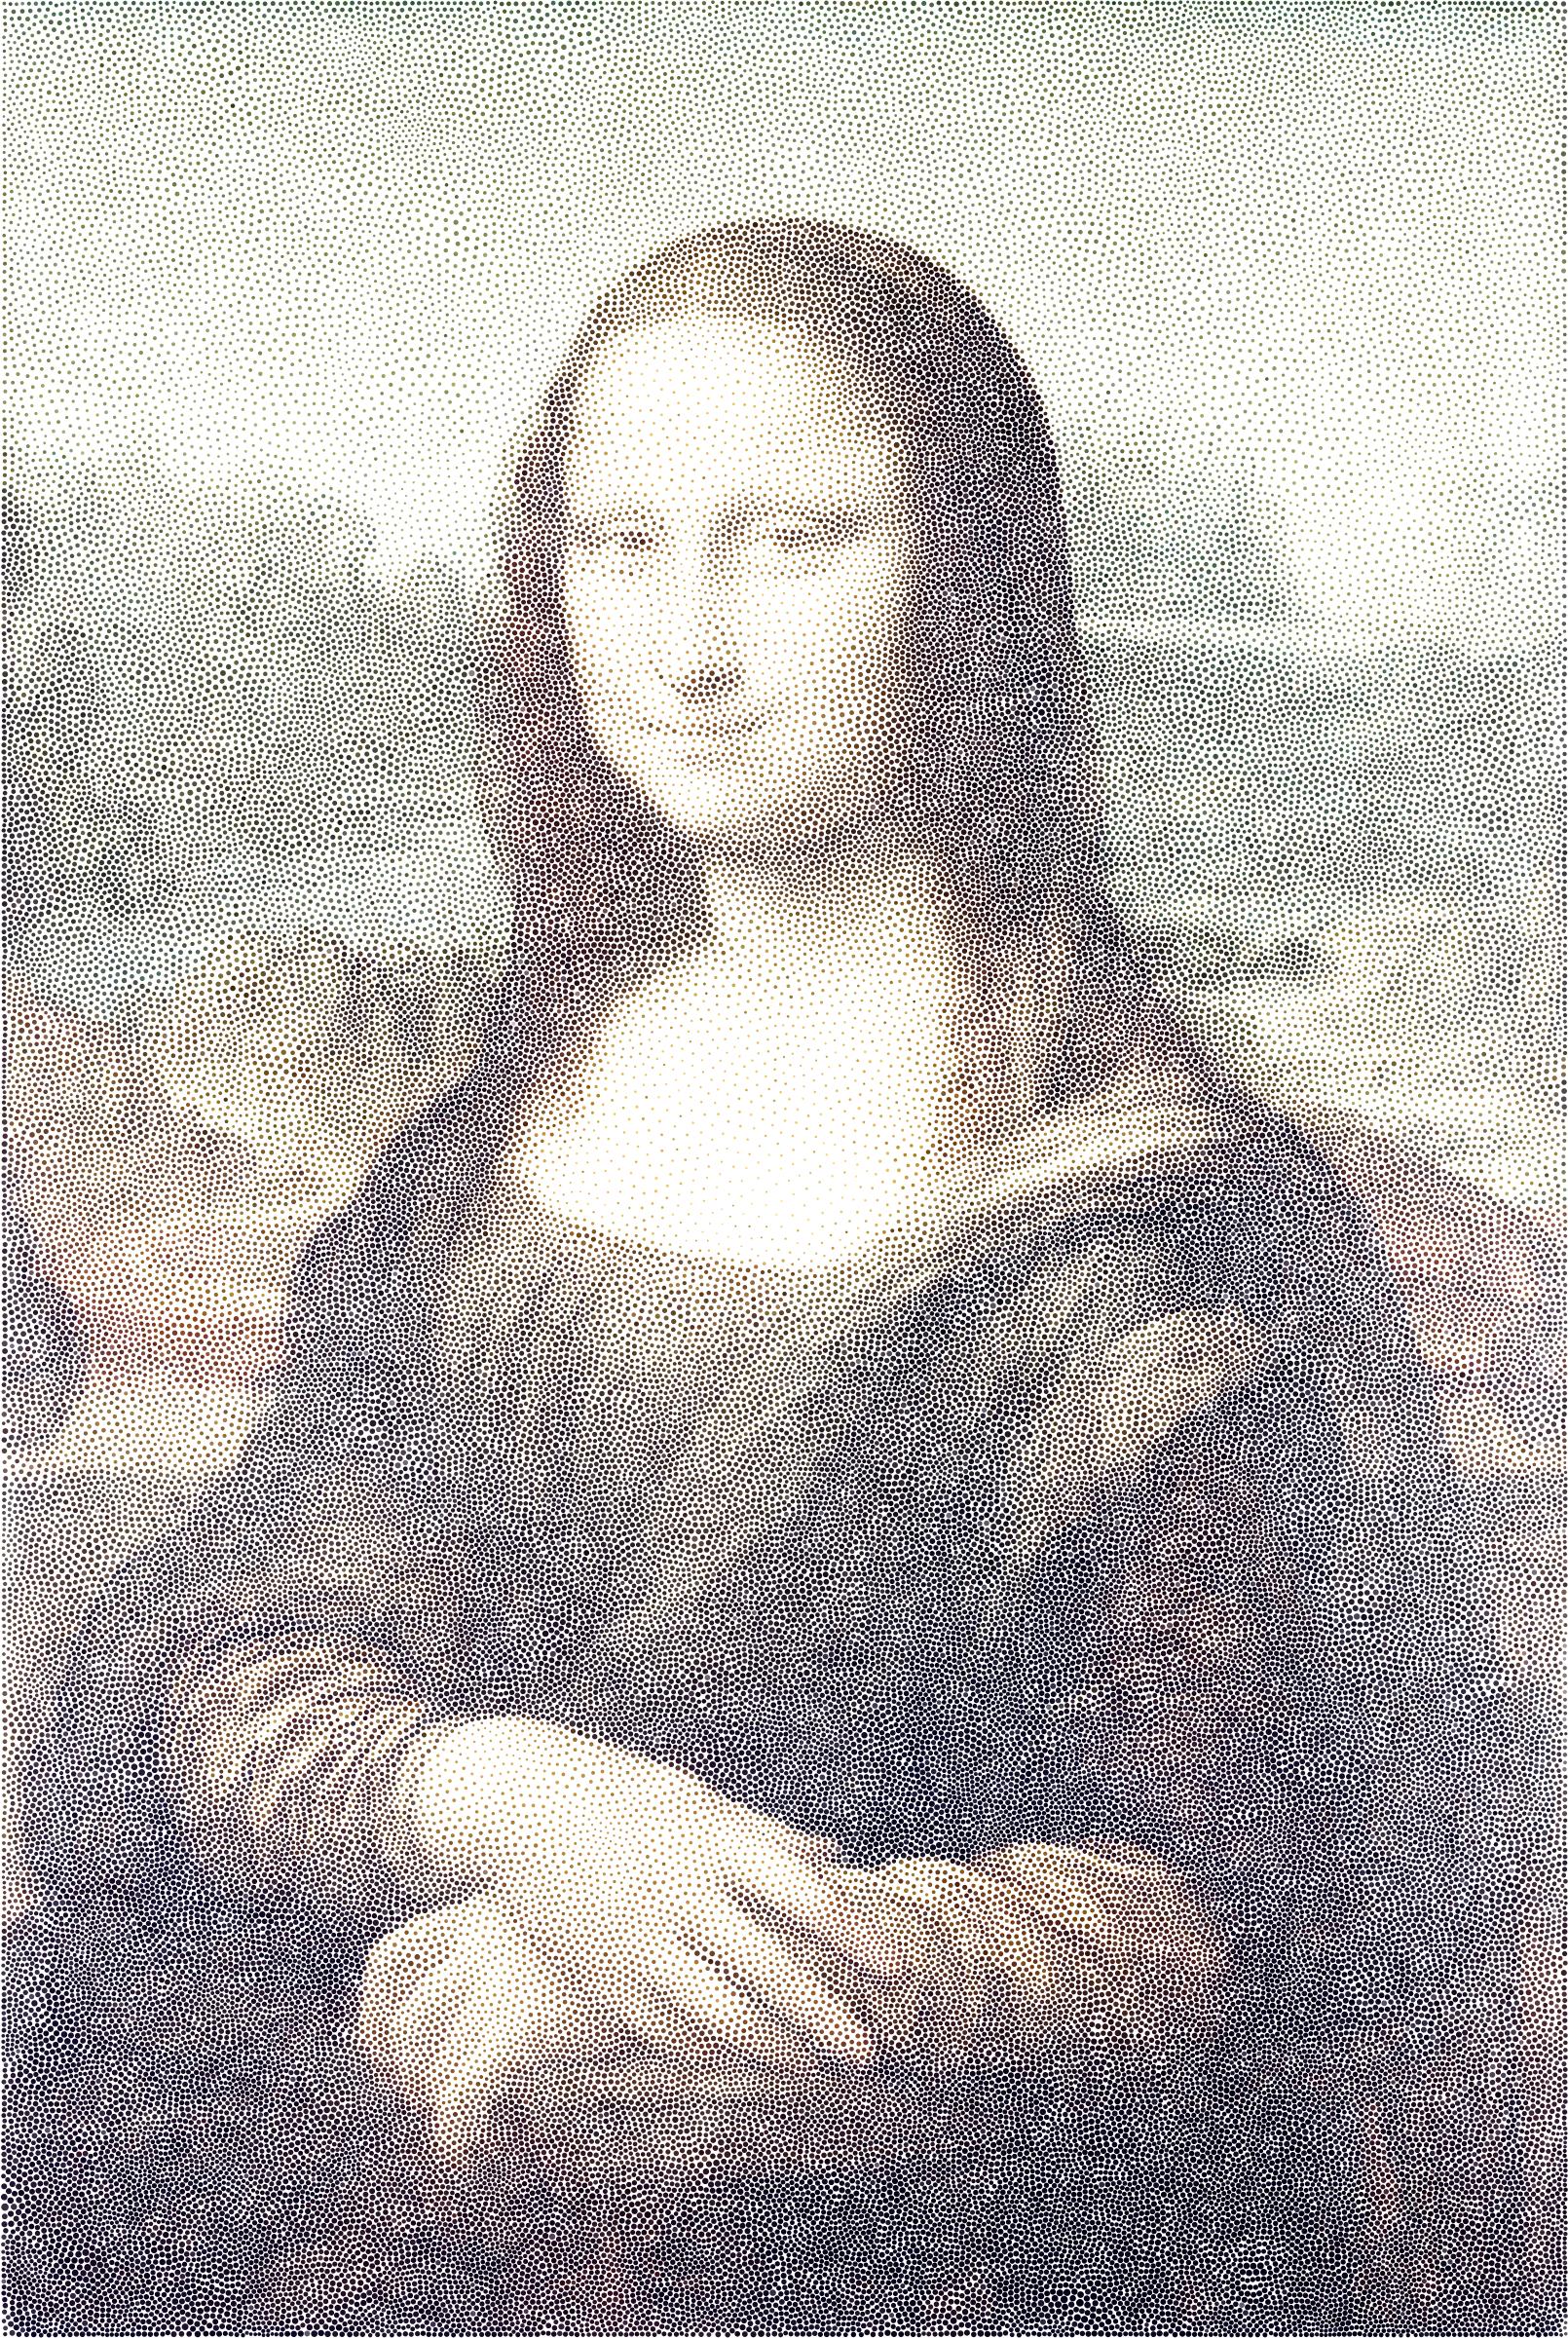 Mona Lisa Stippled png